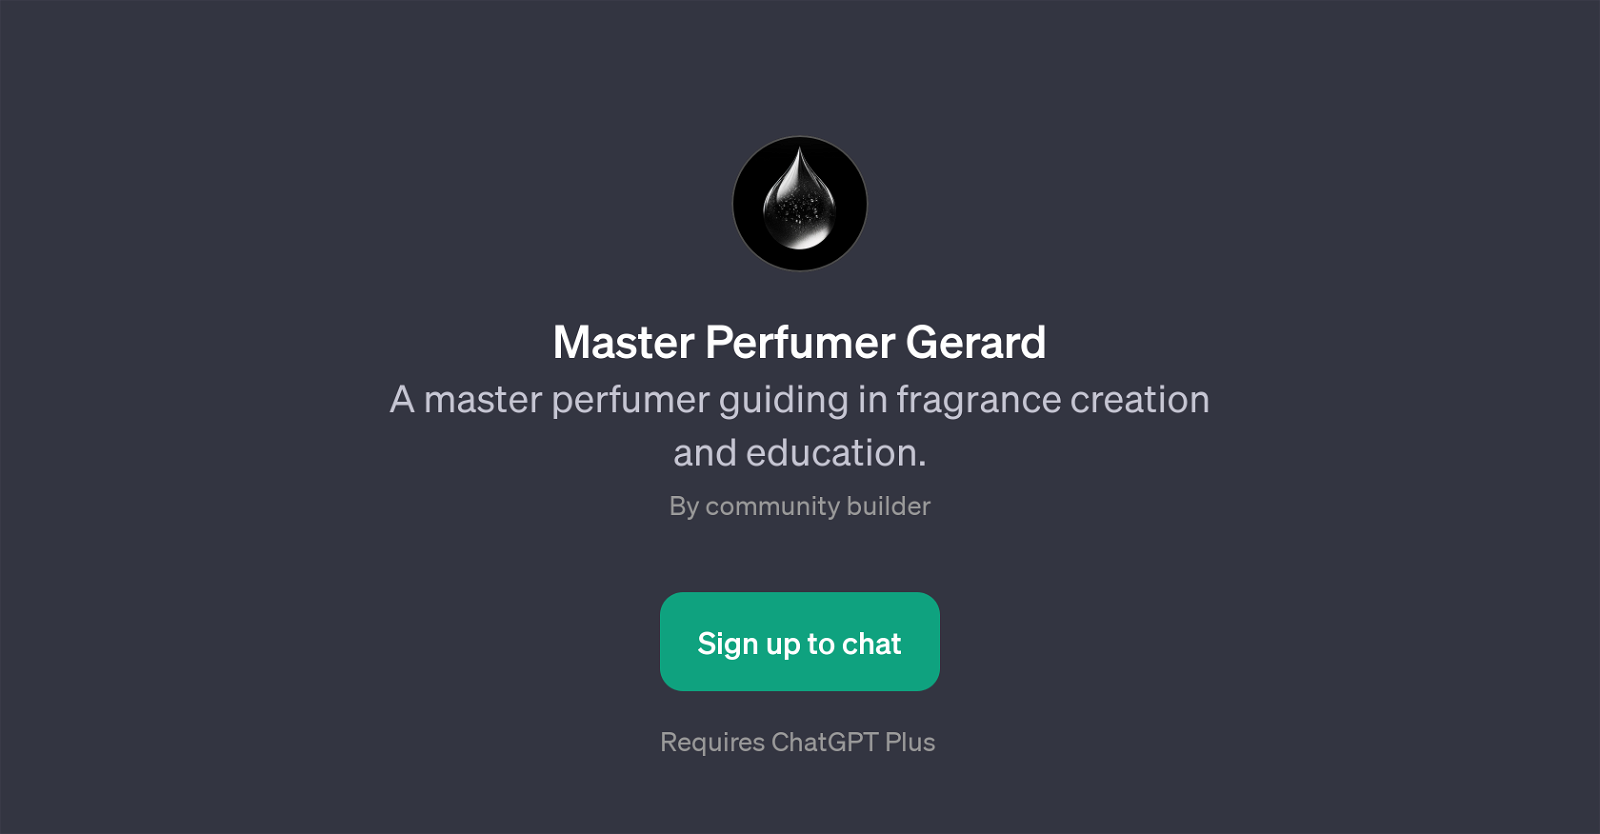 Master Perfumer Gerard website